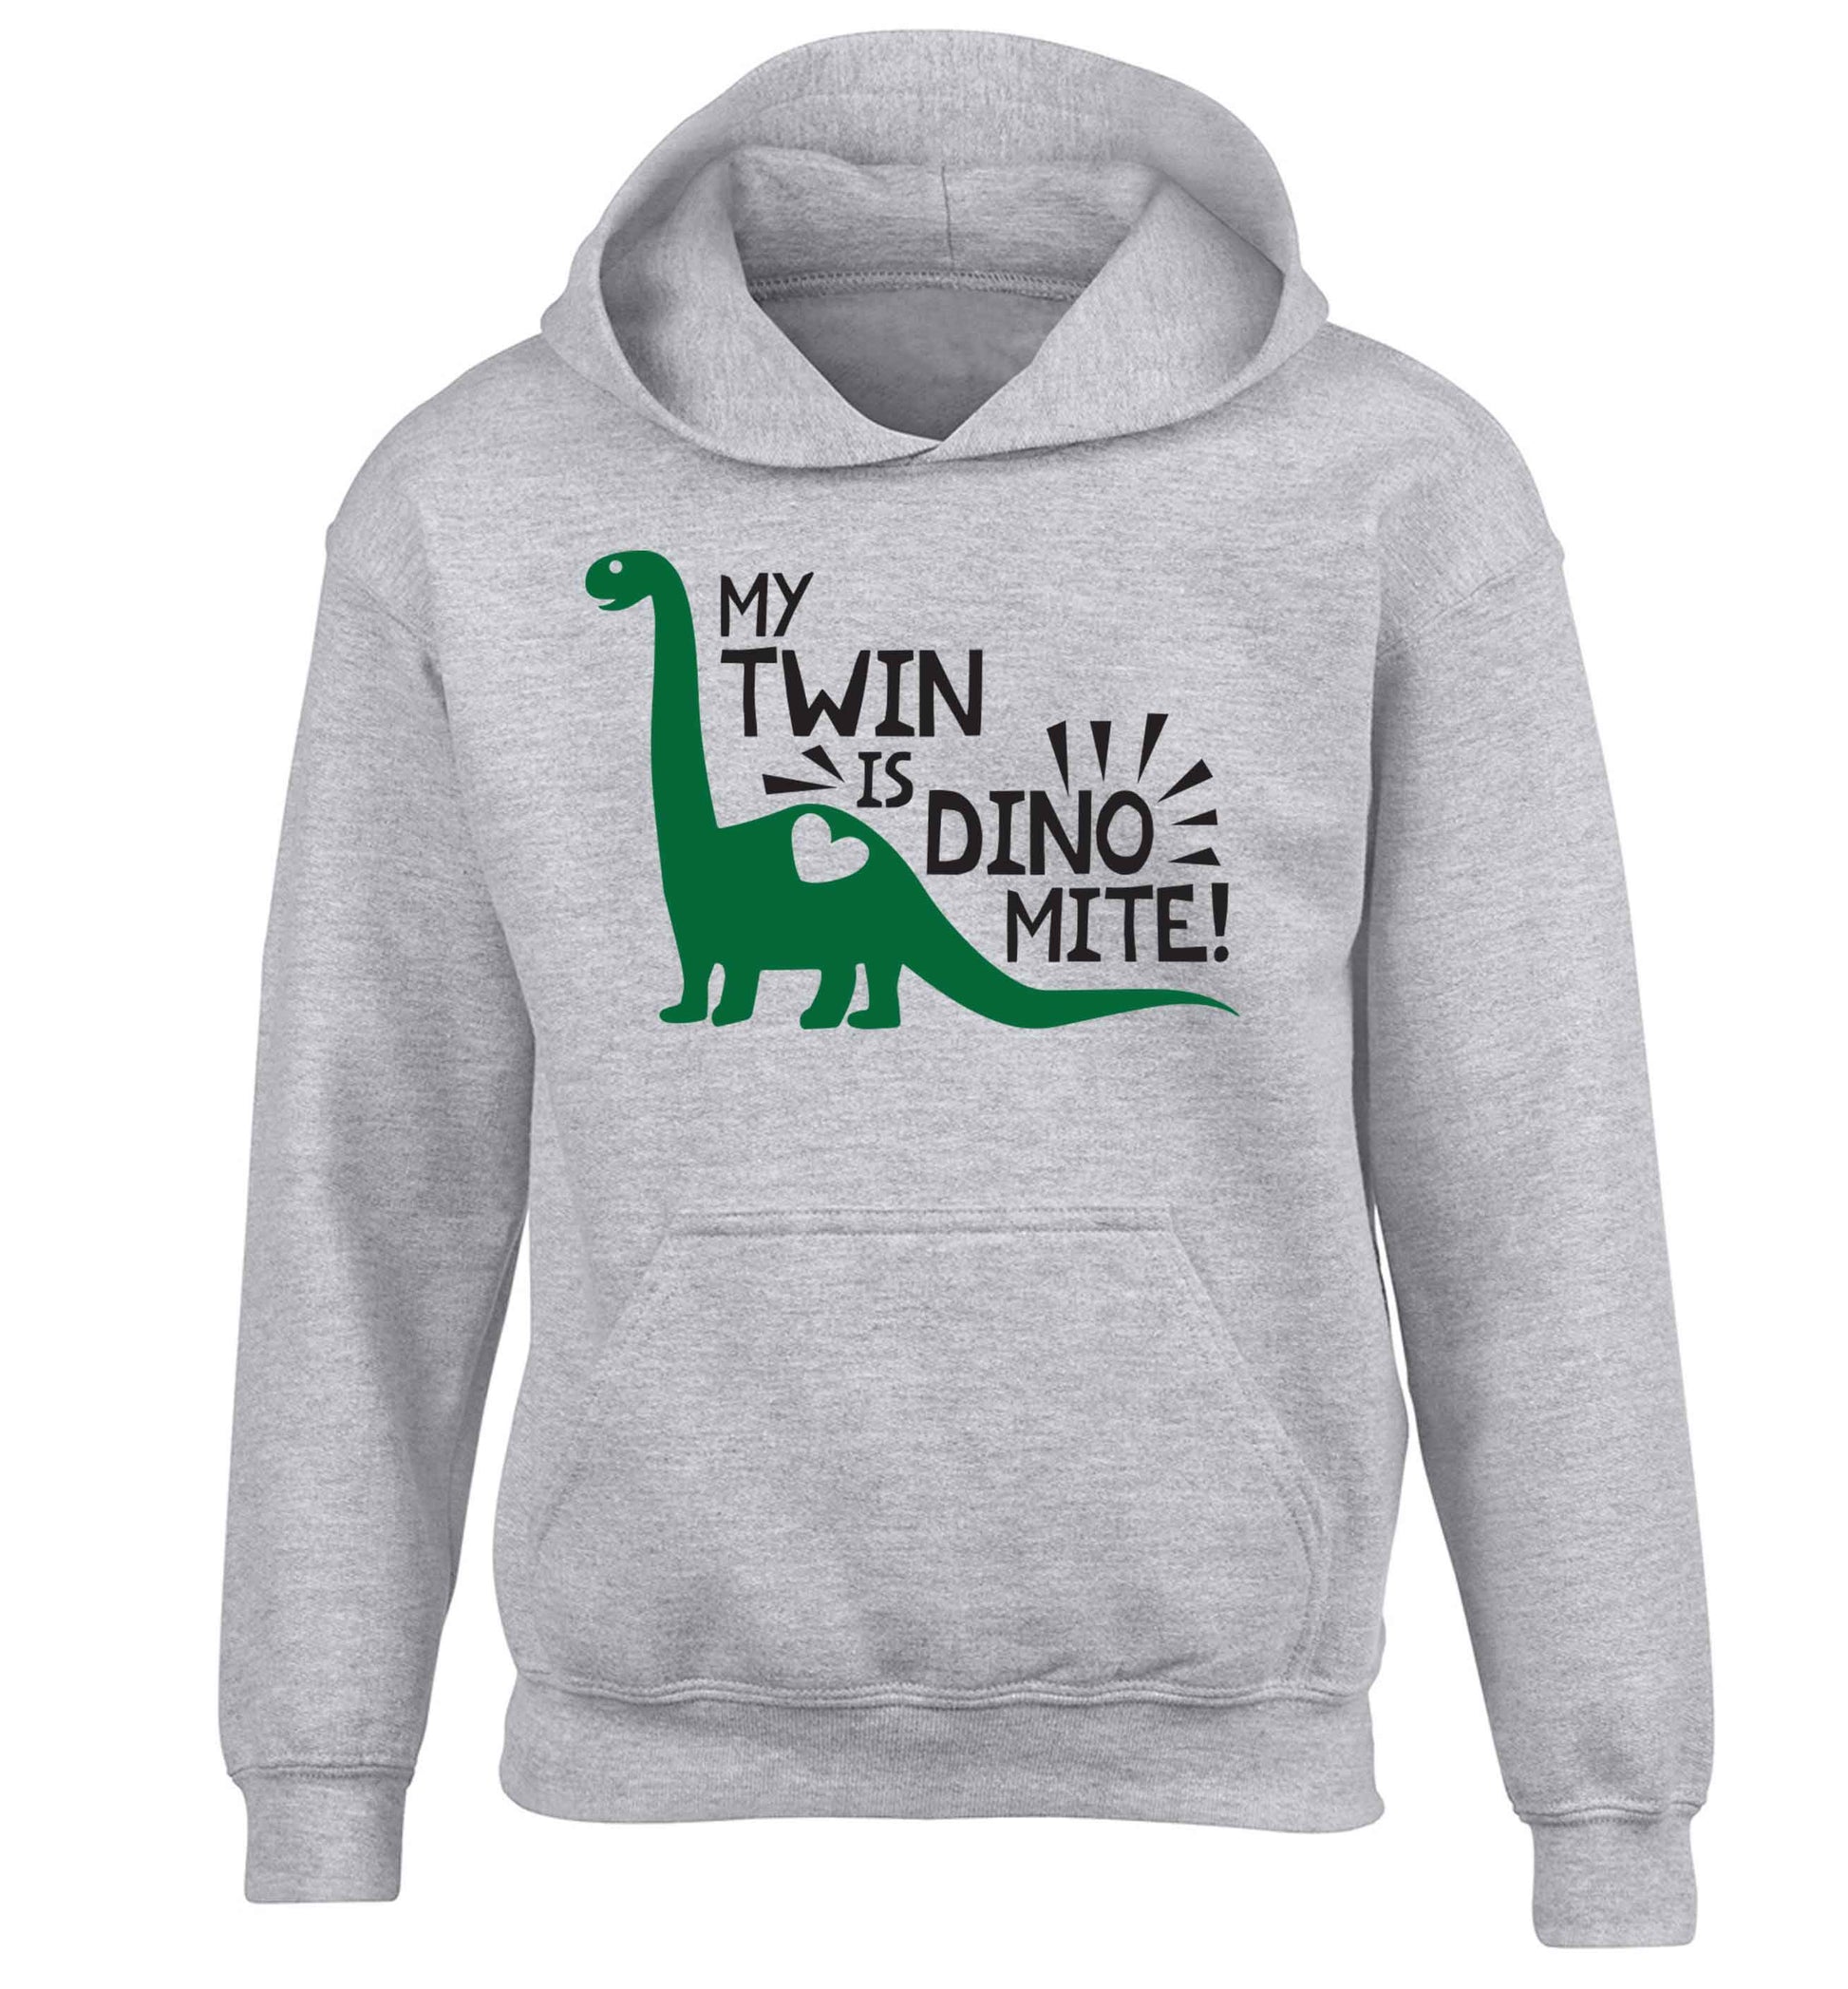 My twin is dinomite! children's grey hoodie 12-13 Years